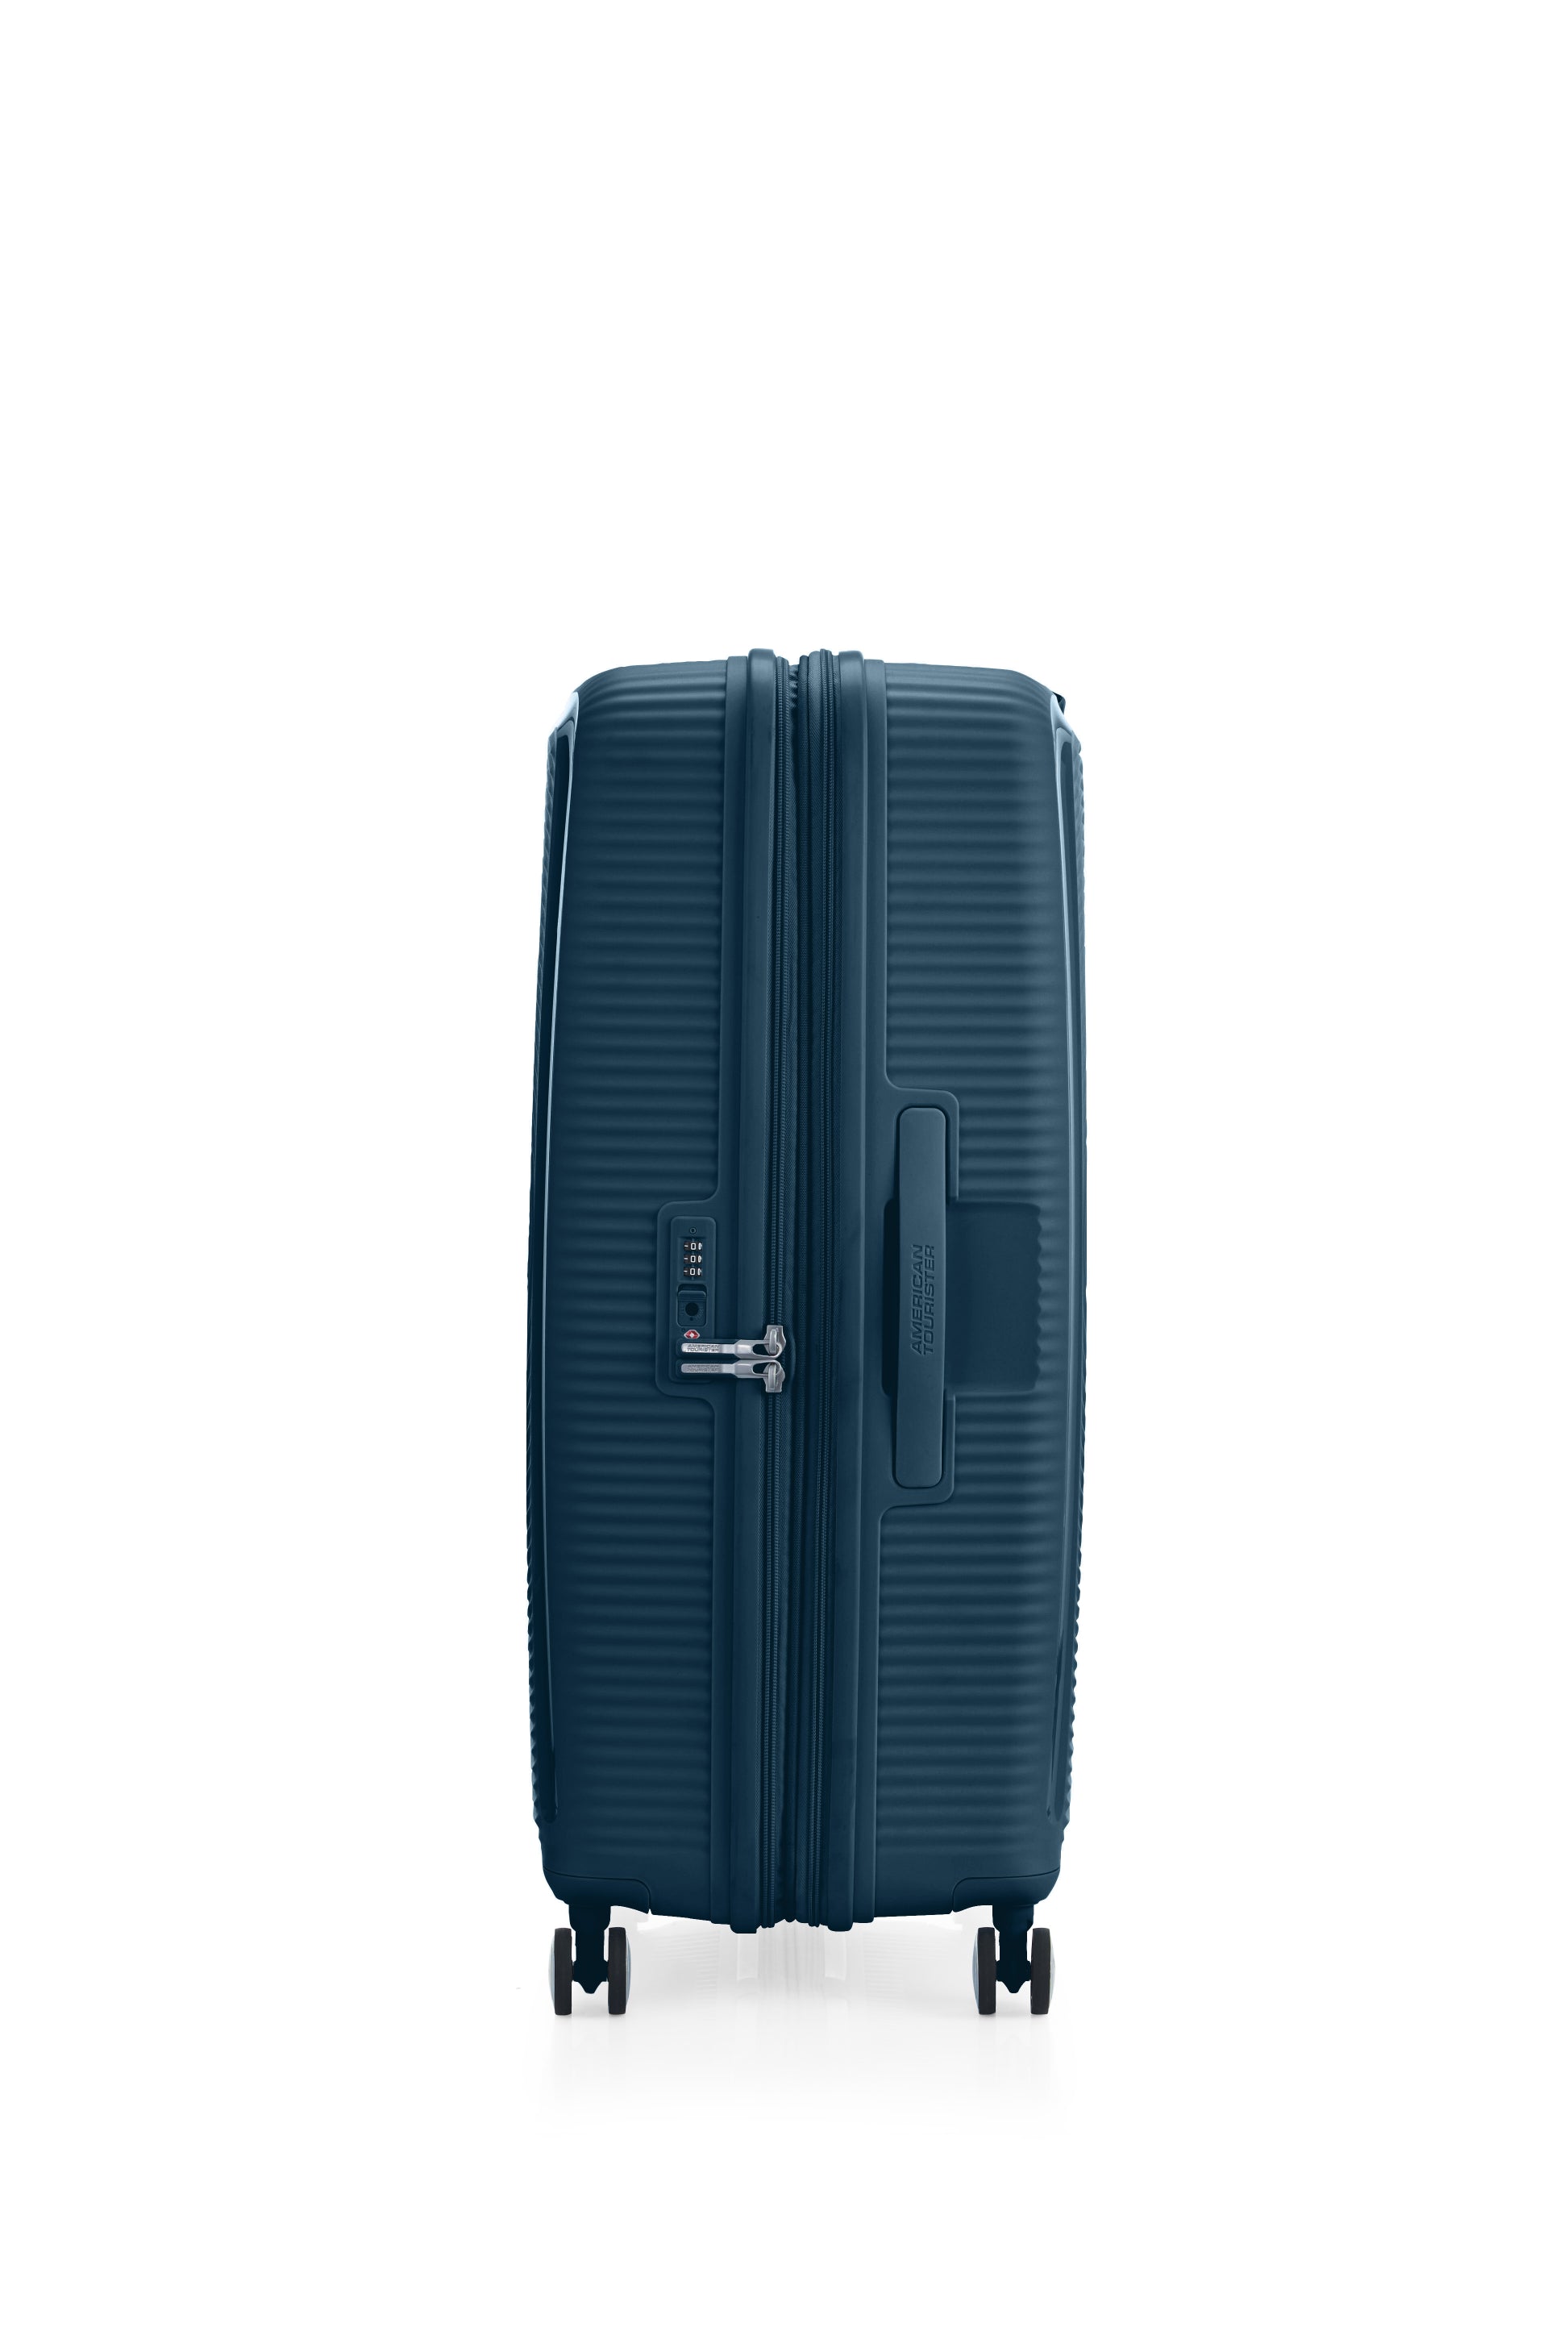 American Tourister - Curio 2.0 80cm Large Suitcase - Varsity Green-2